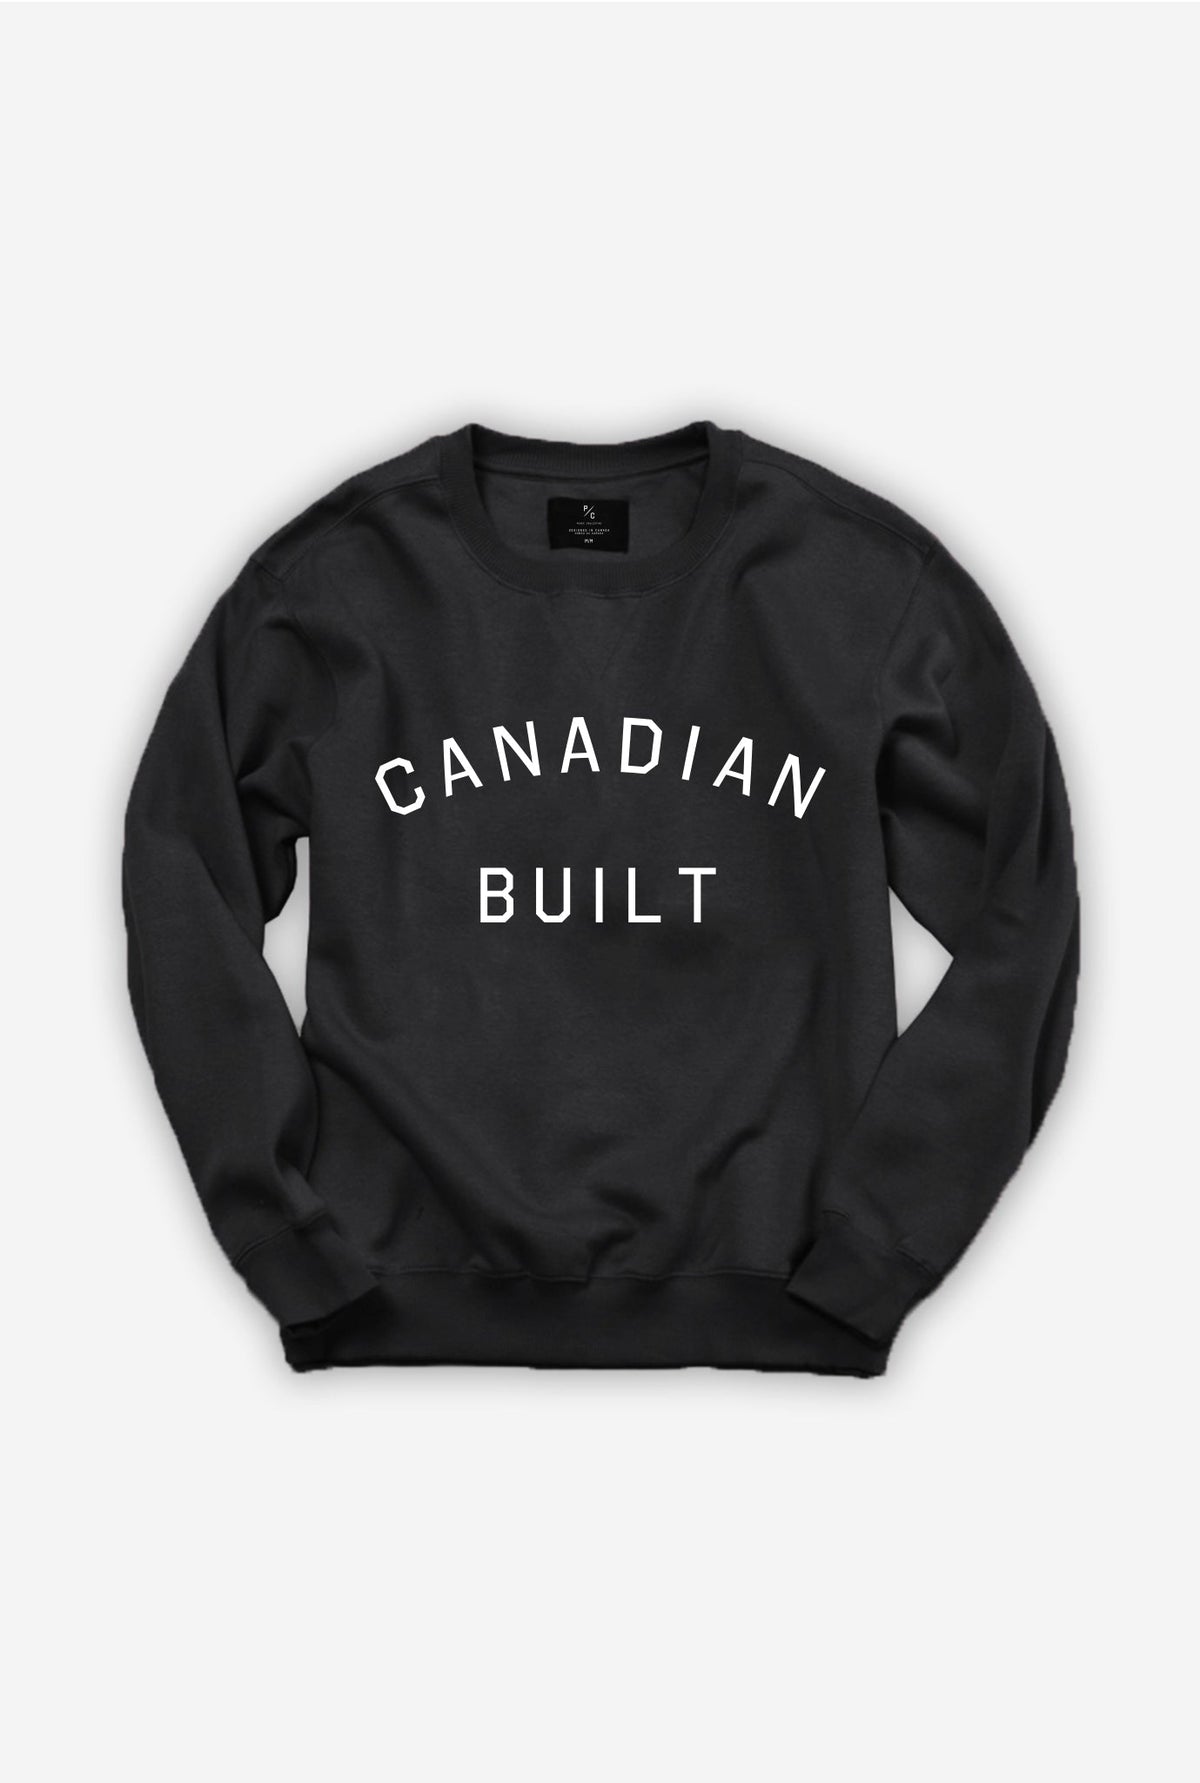 Canadian Built Crewneck - Black